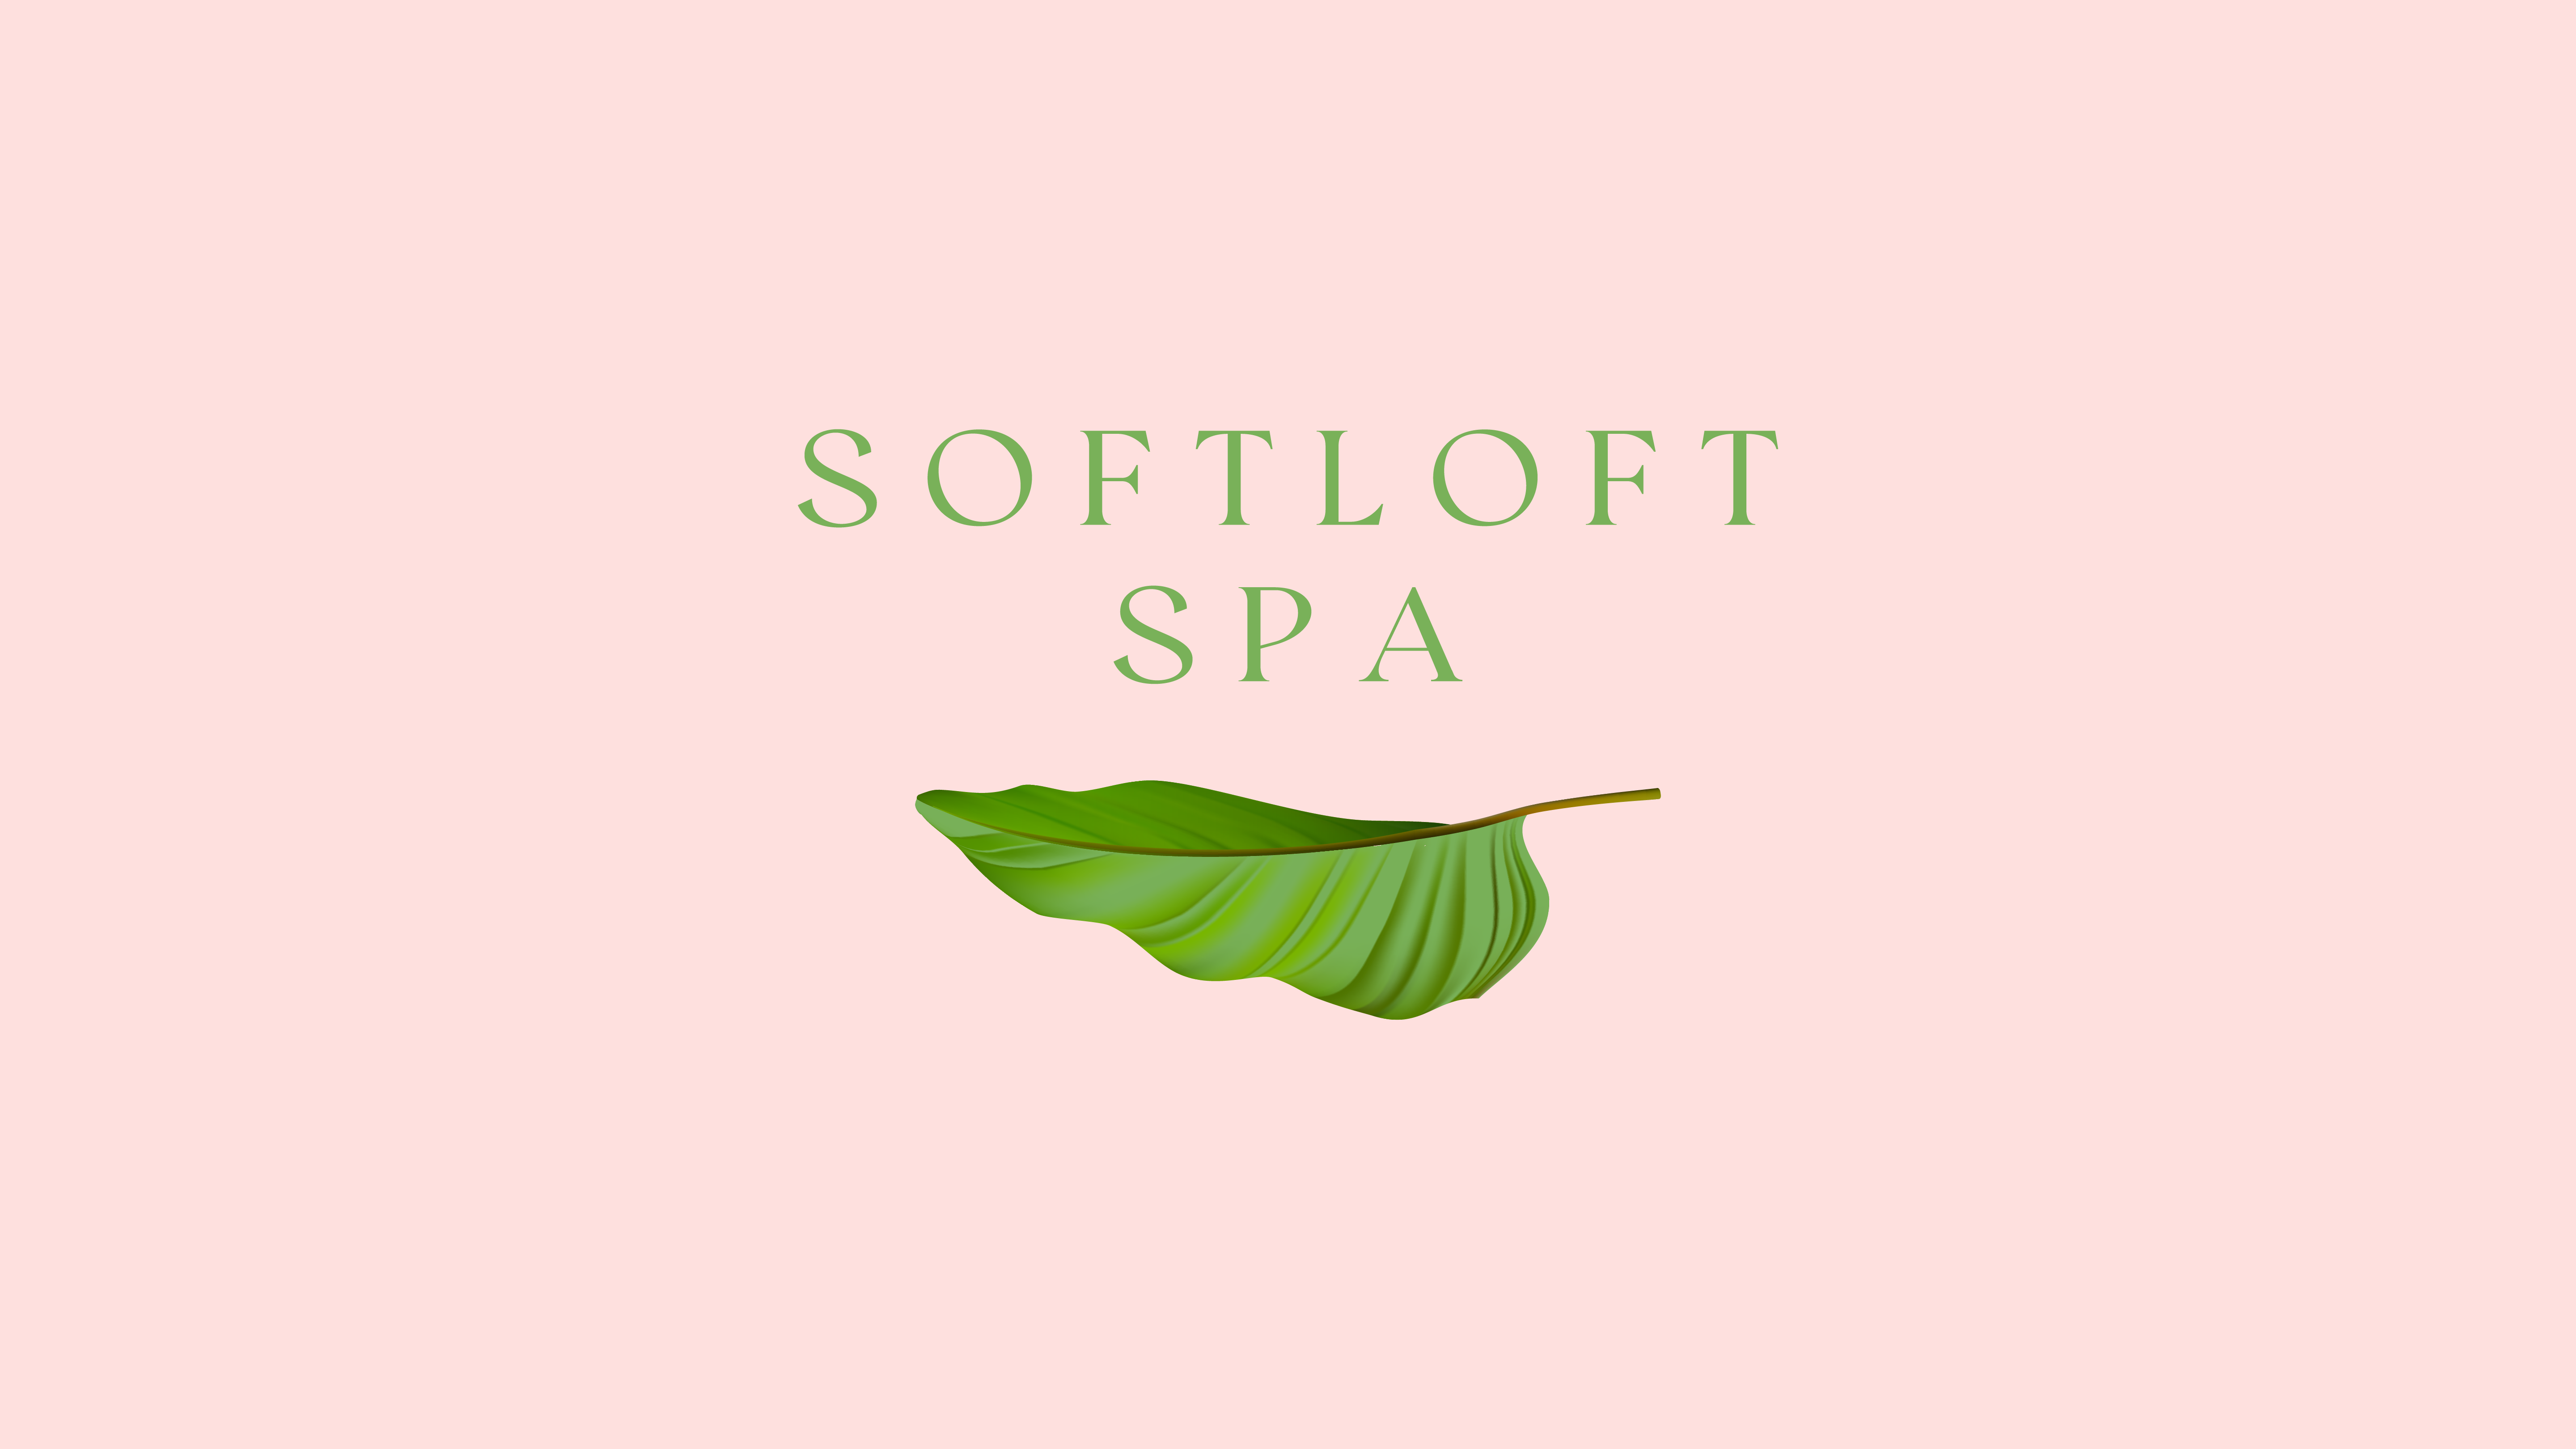 softloft spa supplies 